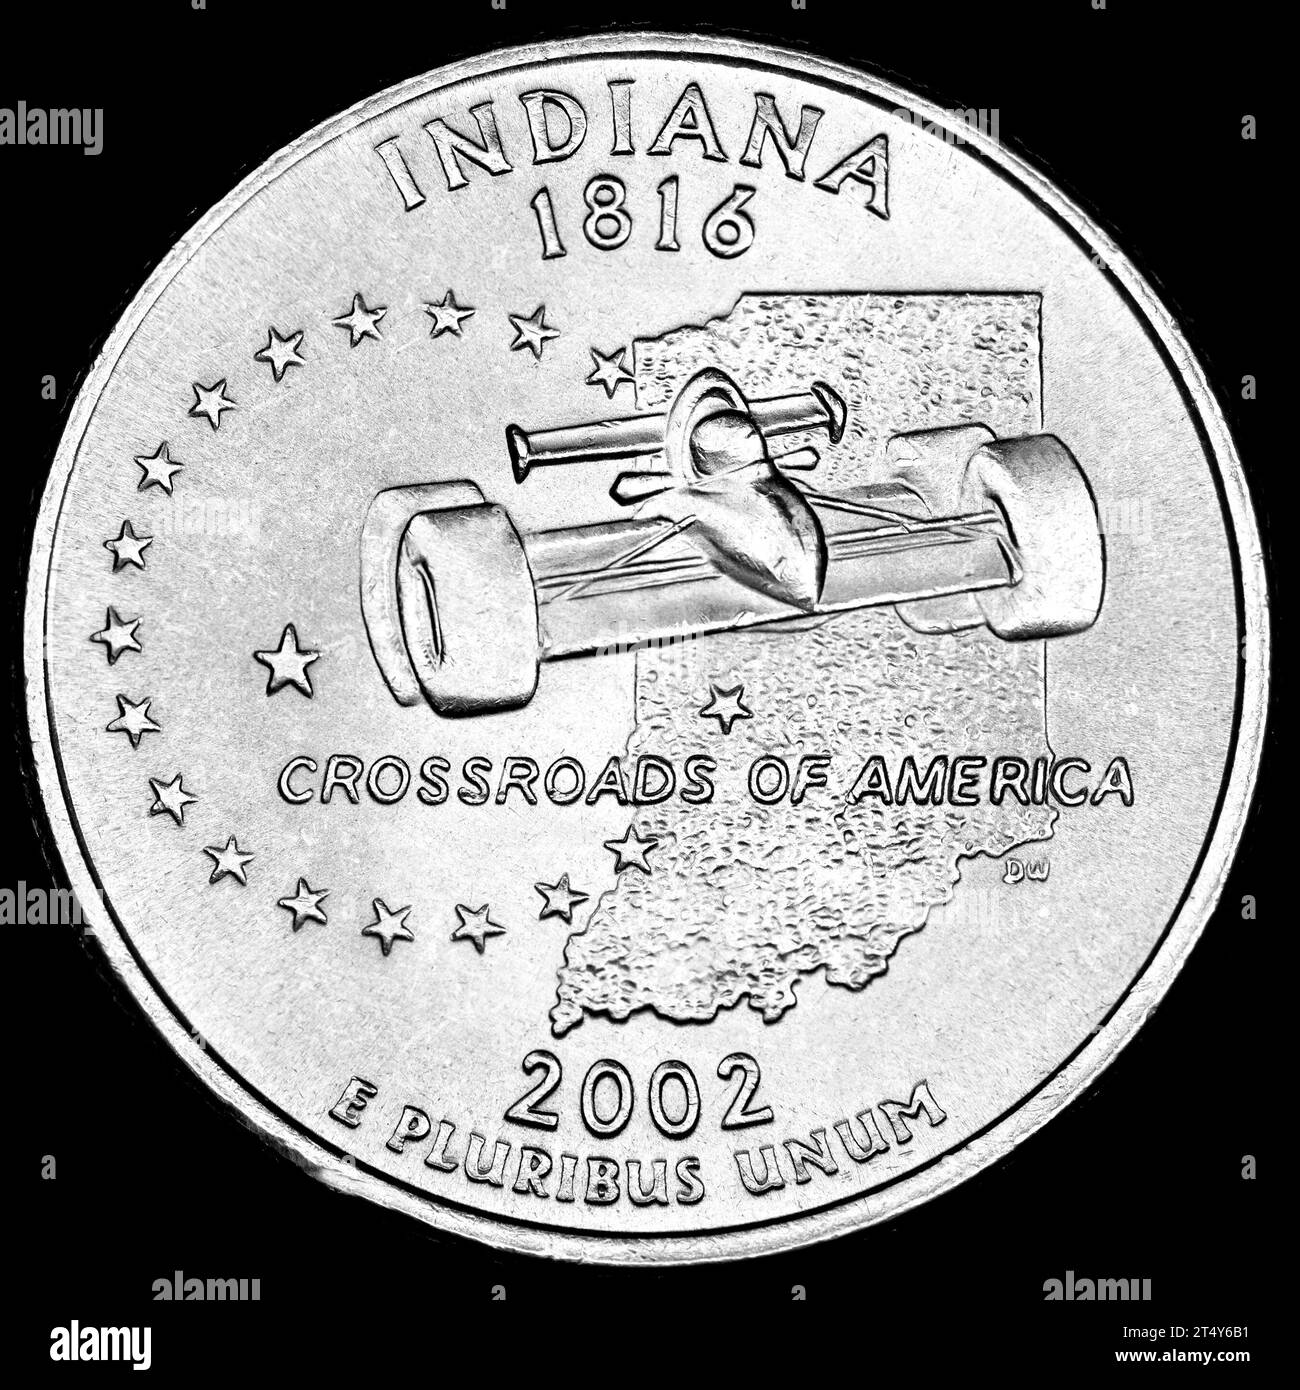 US commemorative State Quarter Dollar : Indians (1816) Crossroads of America Foto Stock